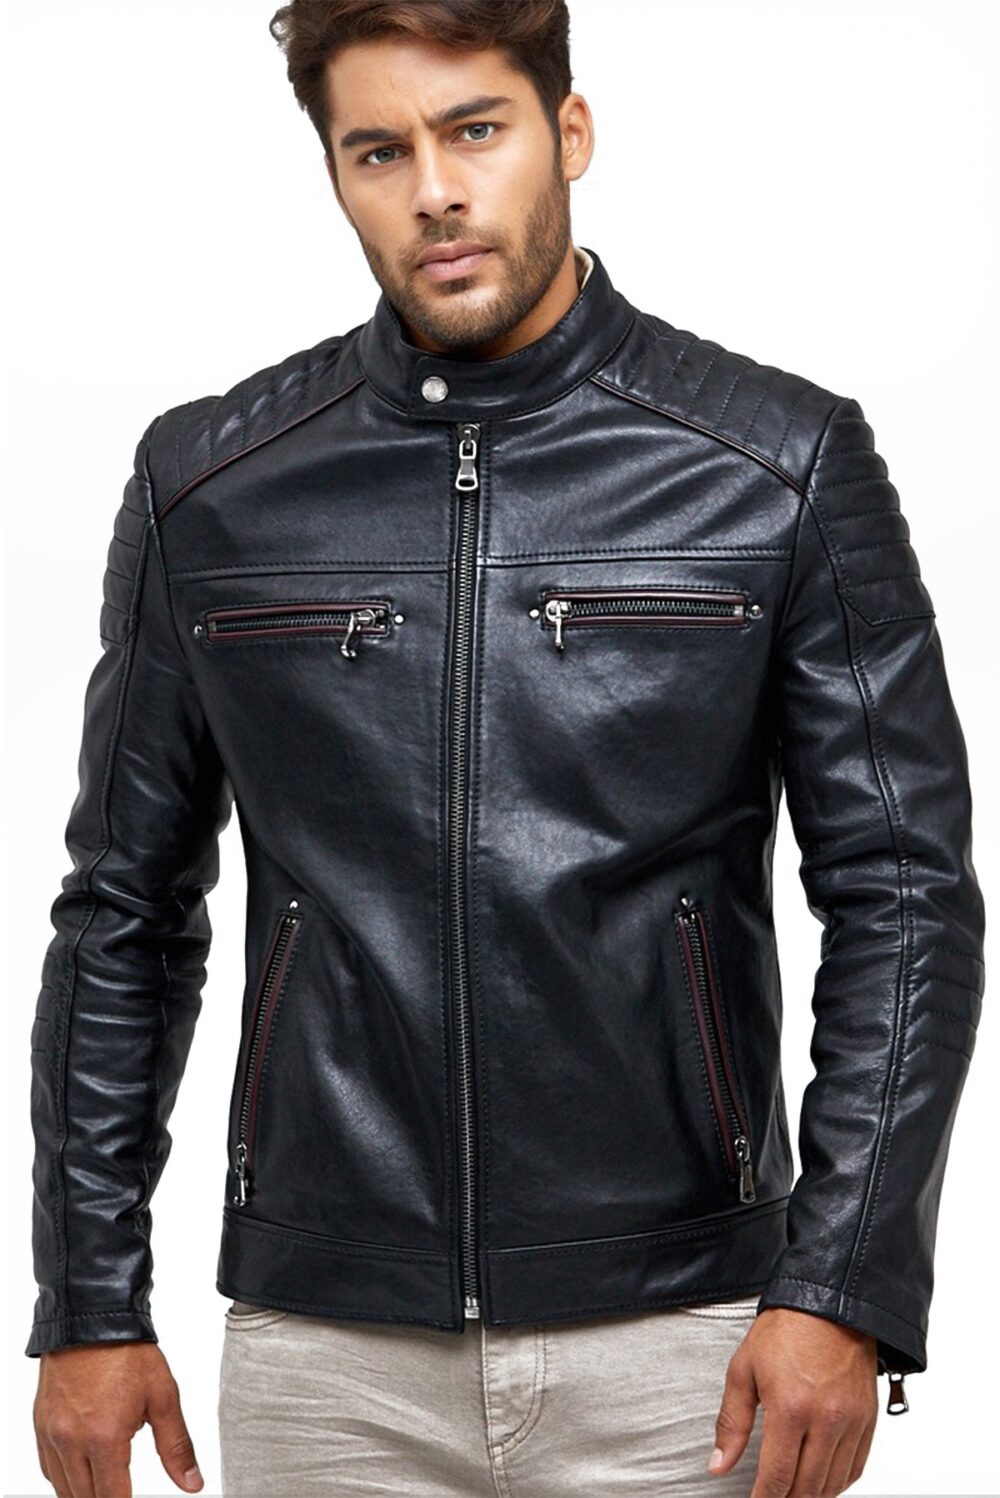 Men's Classic Leather Jacket in Black - Urban Fashion Studio